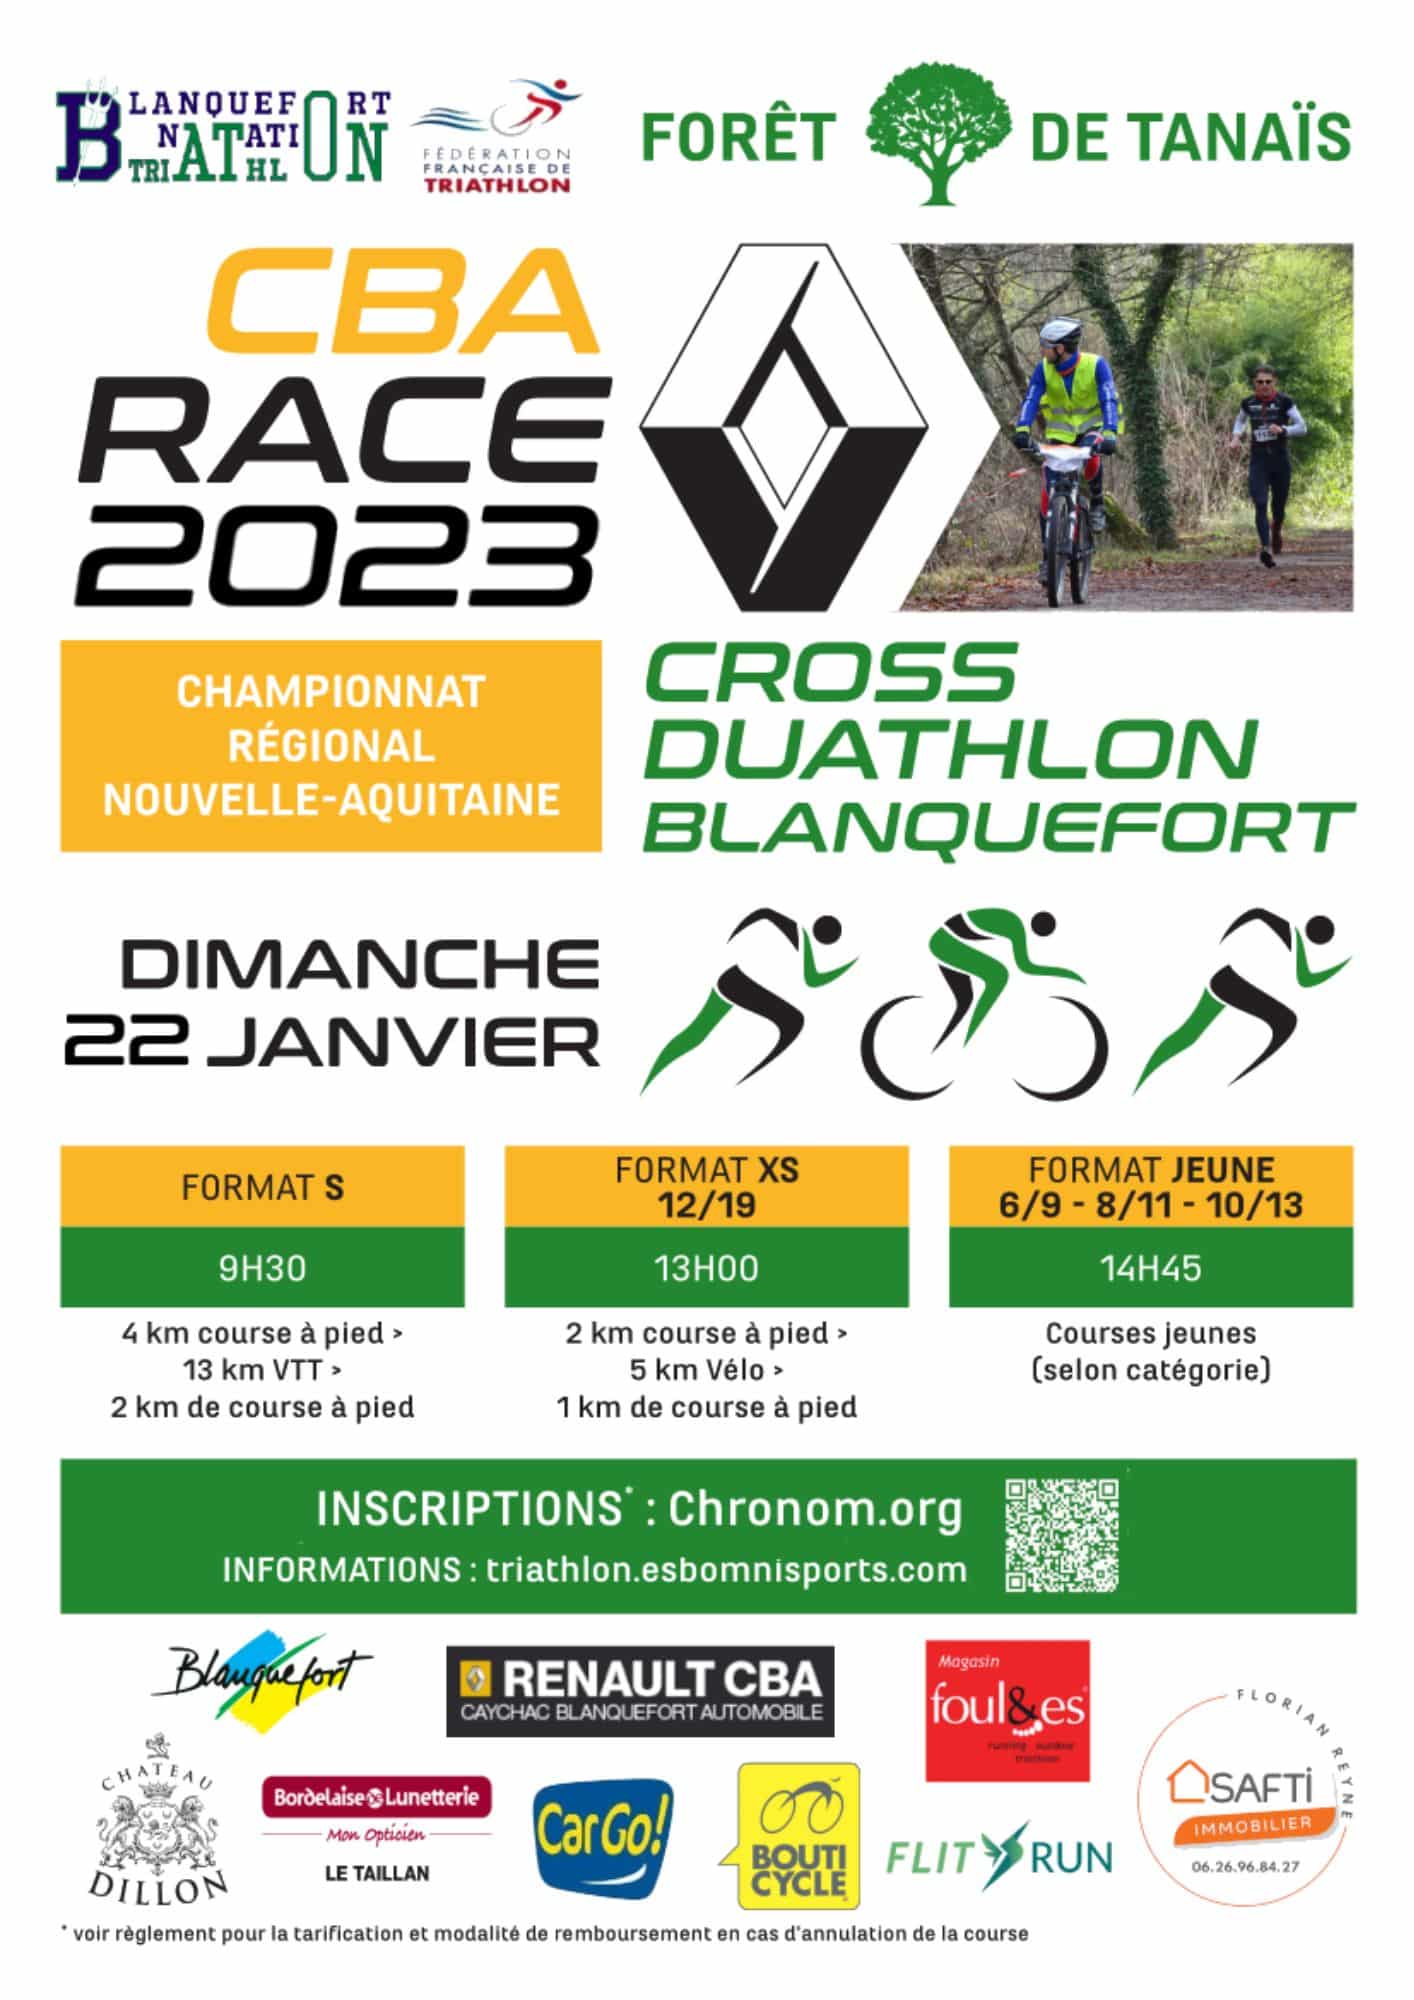 RACE CROSS DUATHLON DE BLANQUEFORT